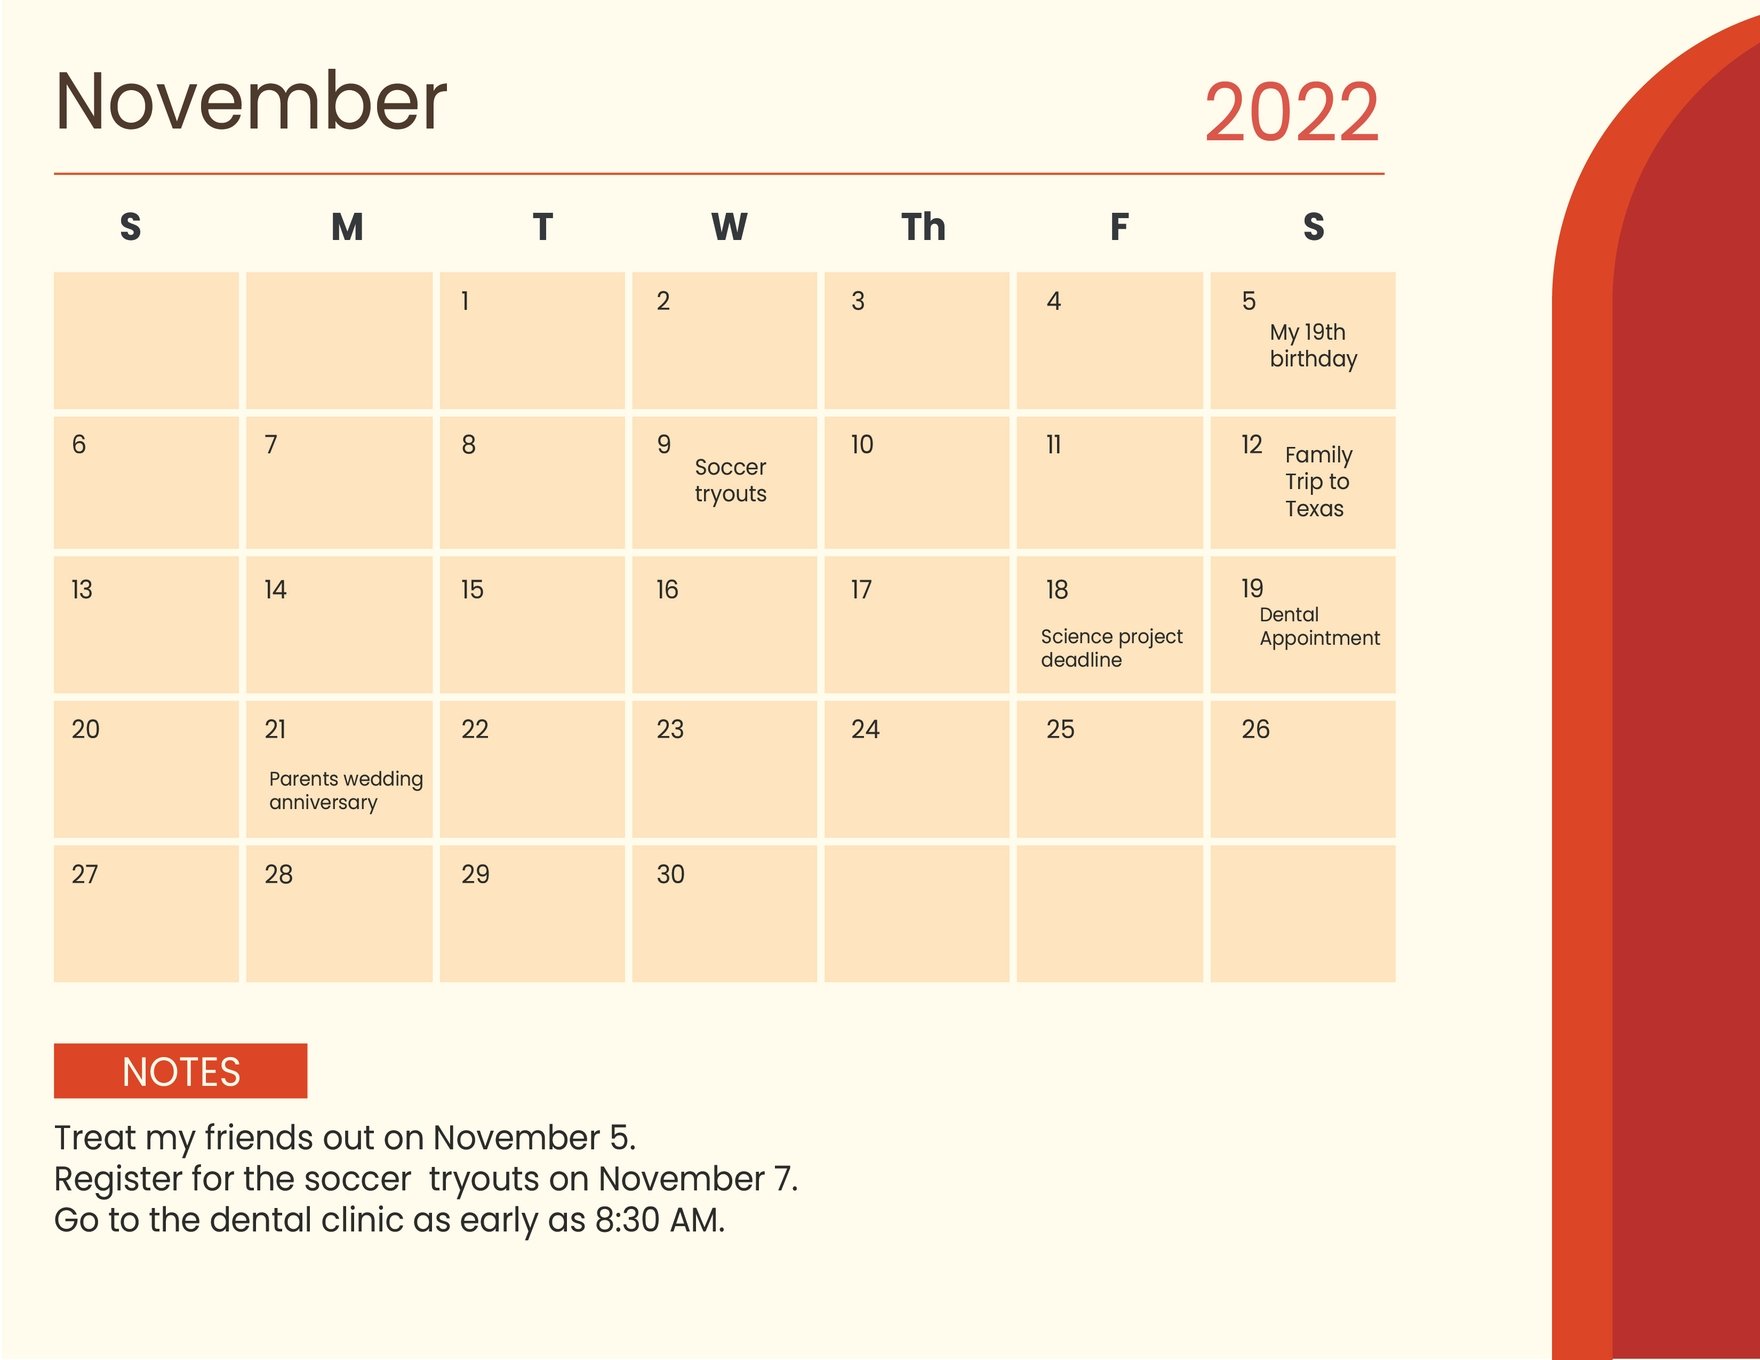 Free Printable November 2022 Calendar Template